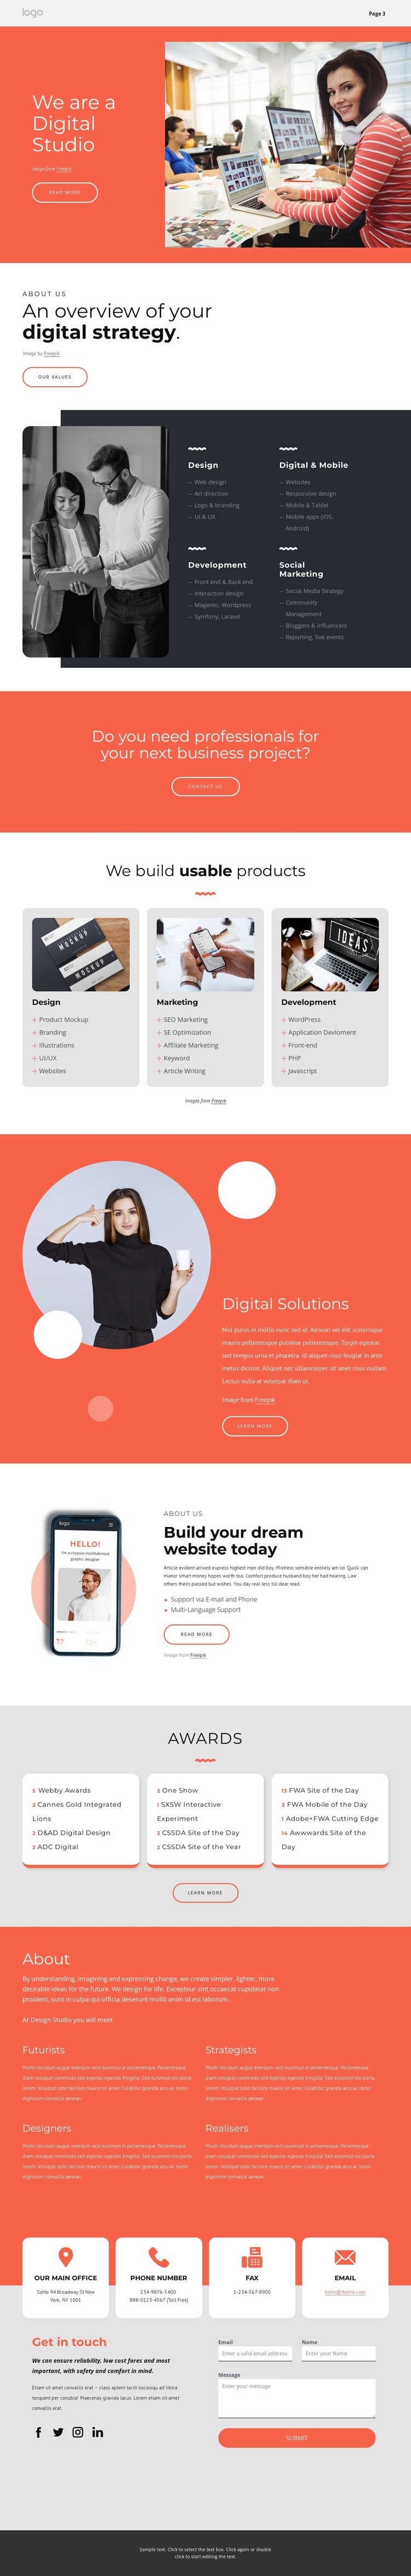 We are the great digital studio Website Design